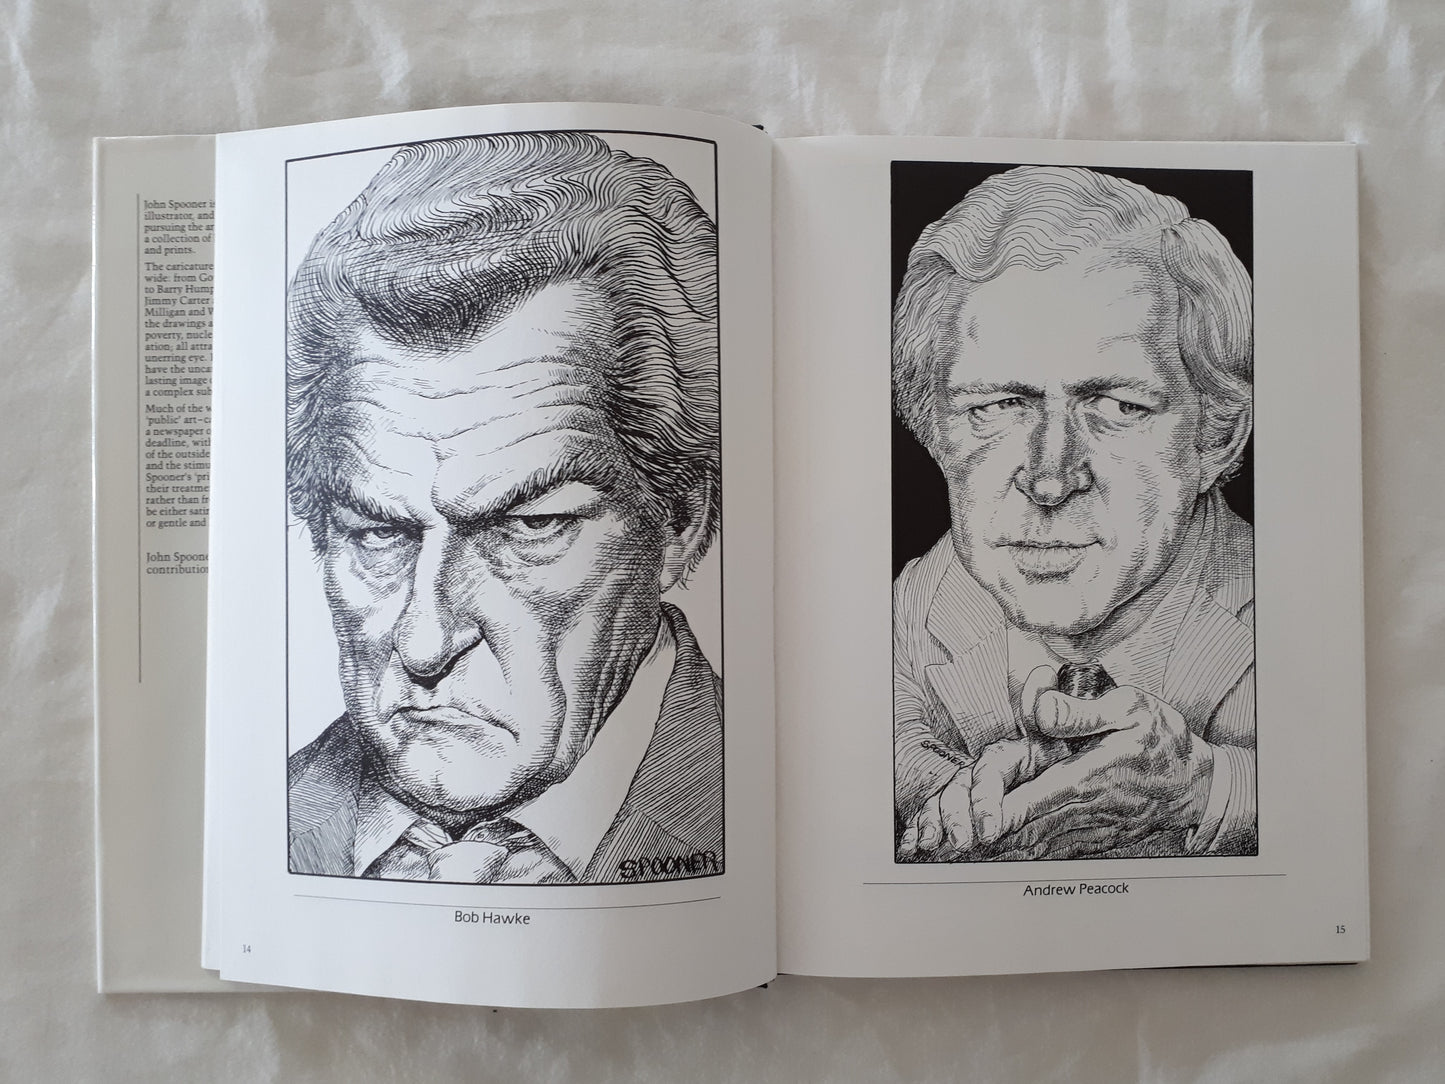 Spooner Caricatures, Drawings and Prints by John Spooner